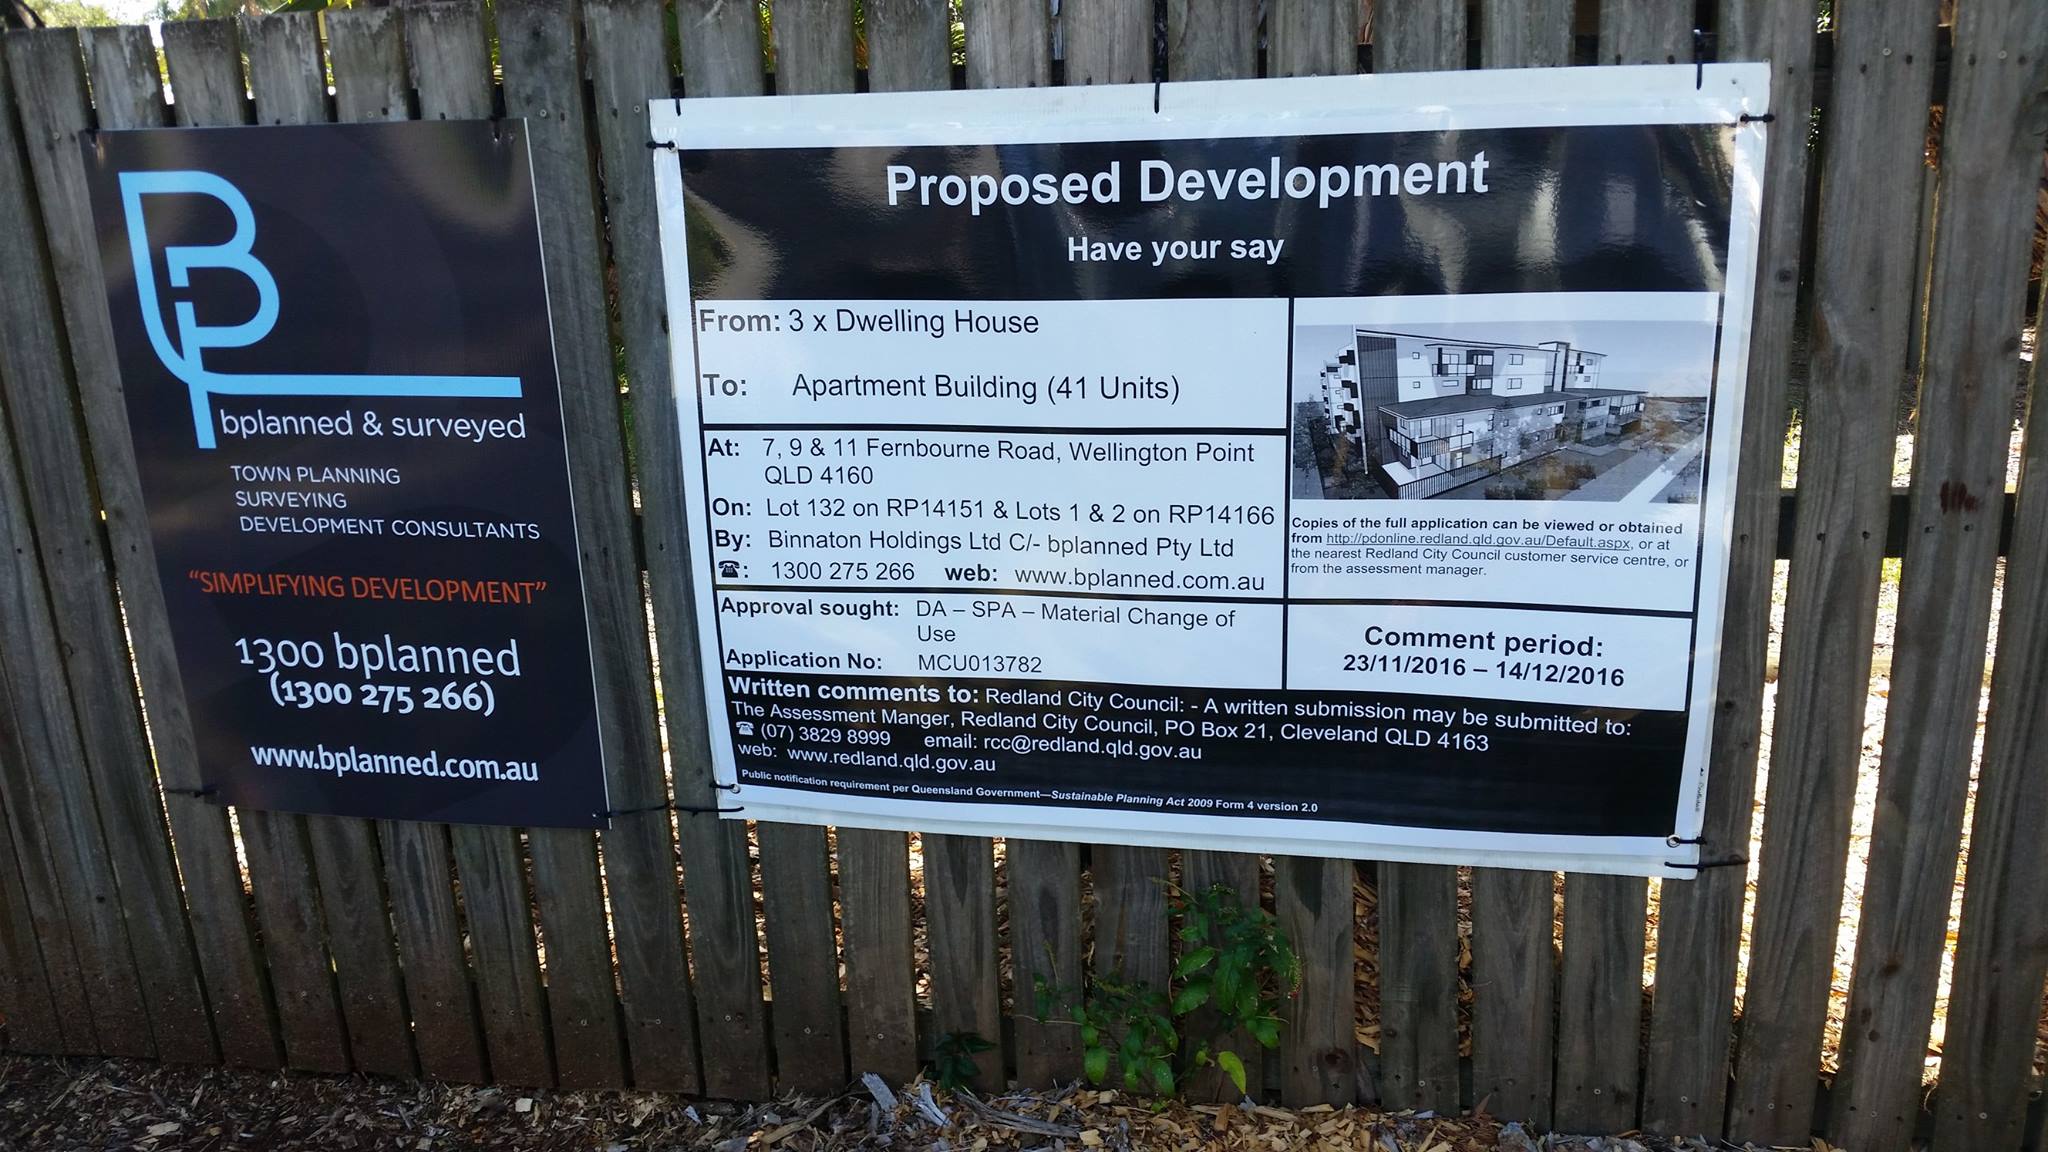 Public consultation about a development application in Fernbourne Road Wellington Point closes soon 